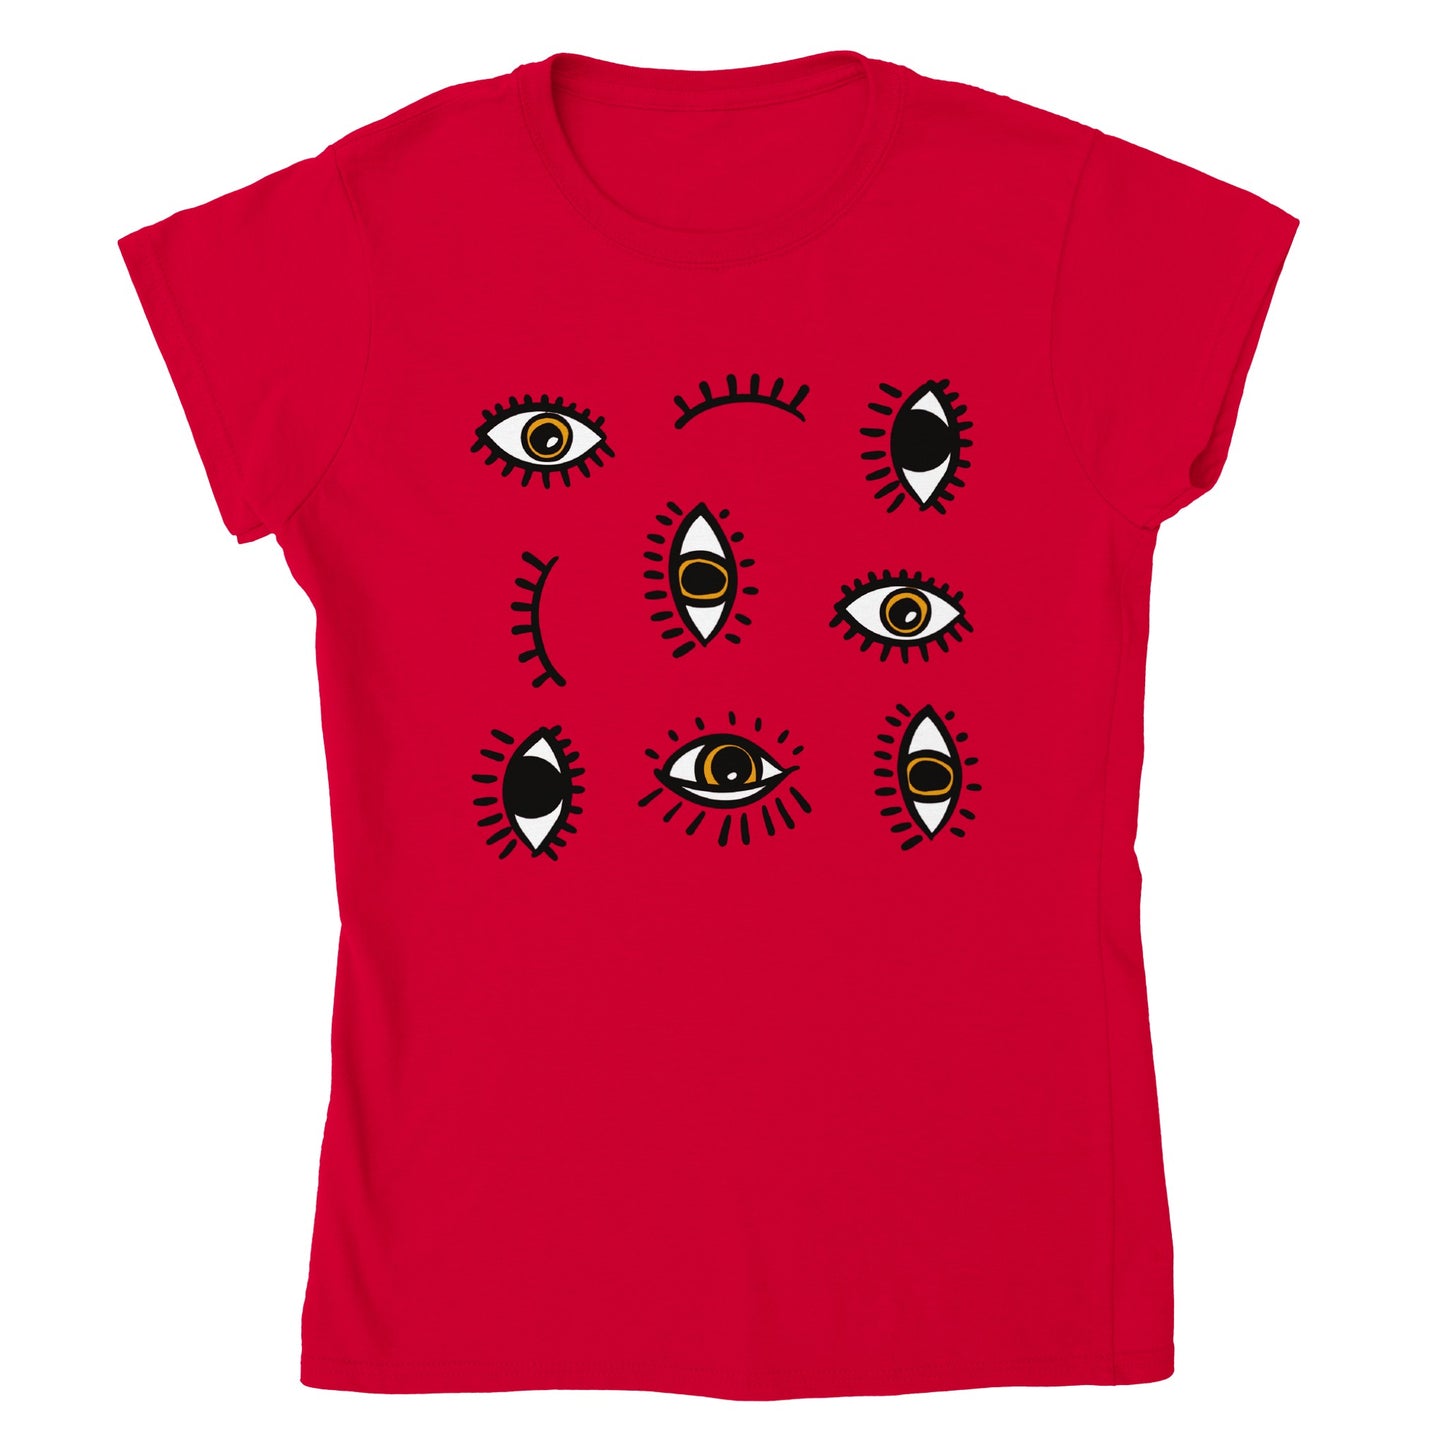 Classic Womens Crewneck T-shirt "Eyes"